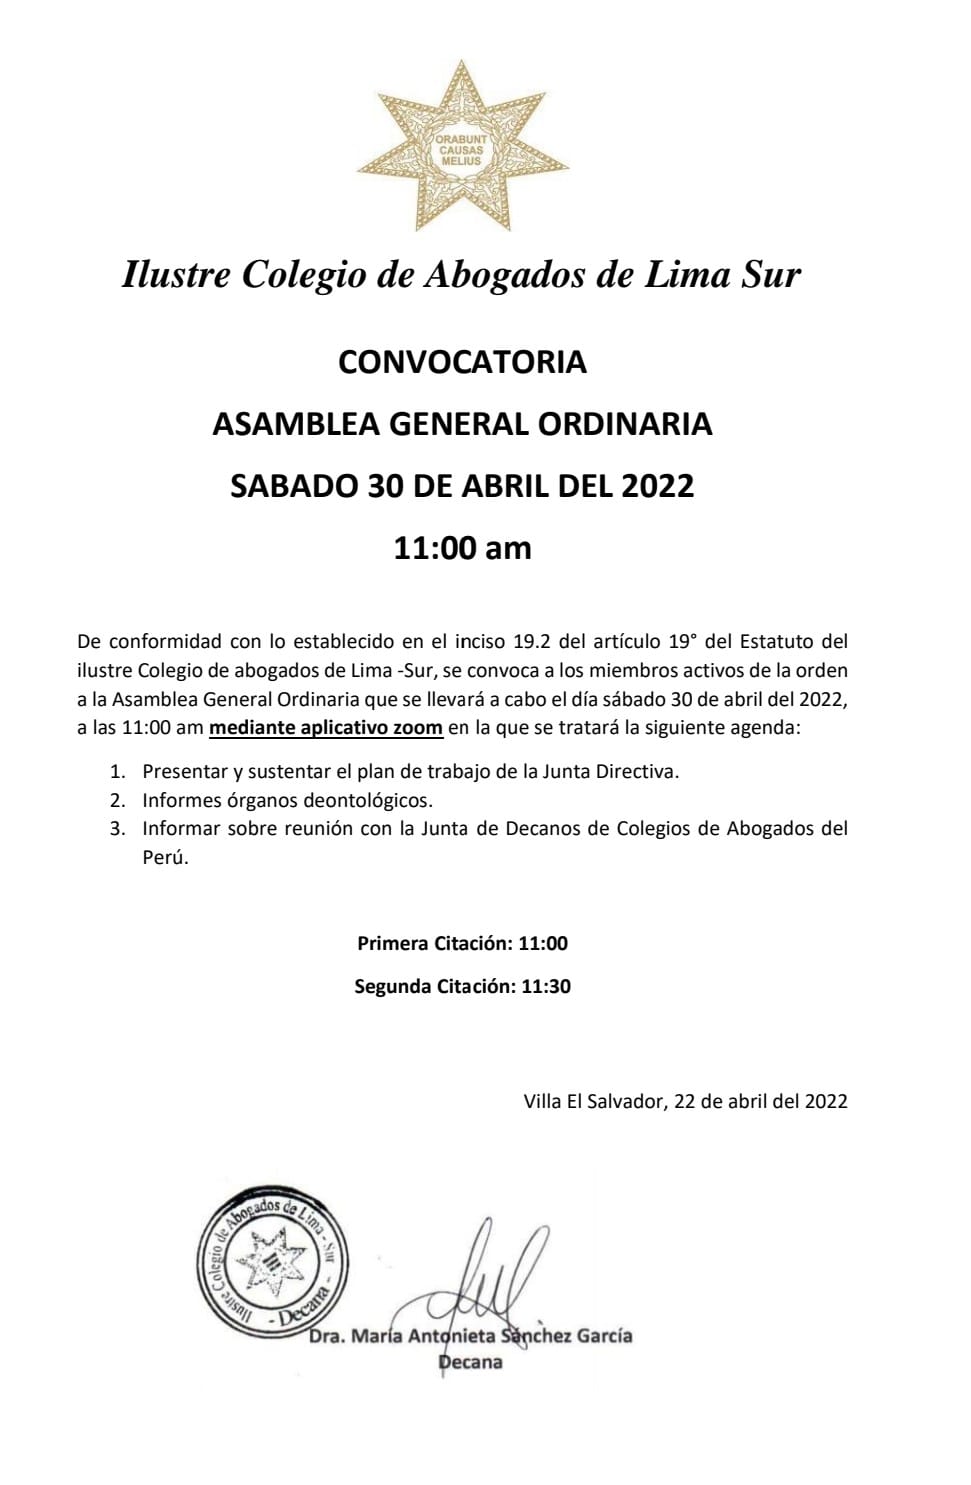 Asamblea General Ordinaria 30/04/22